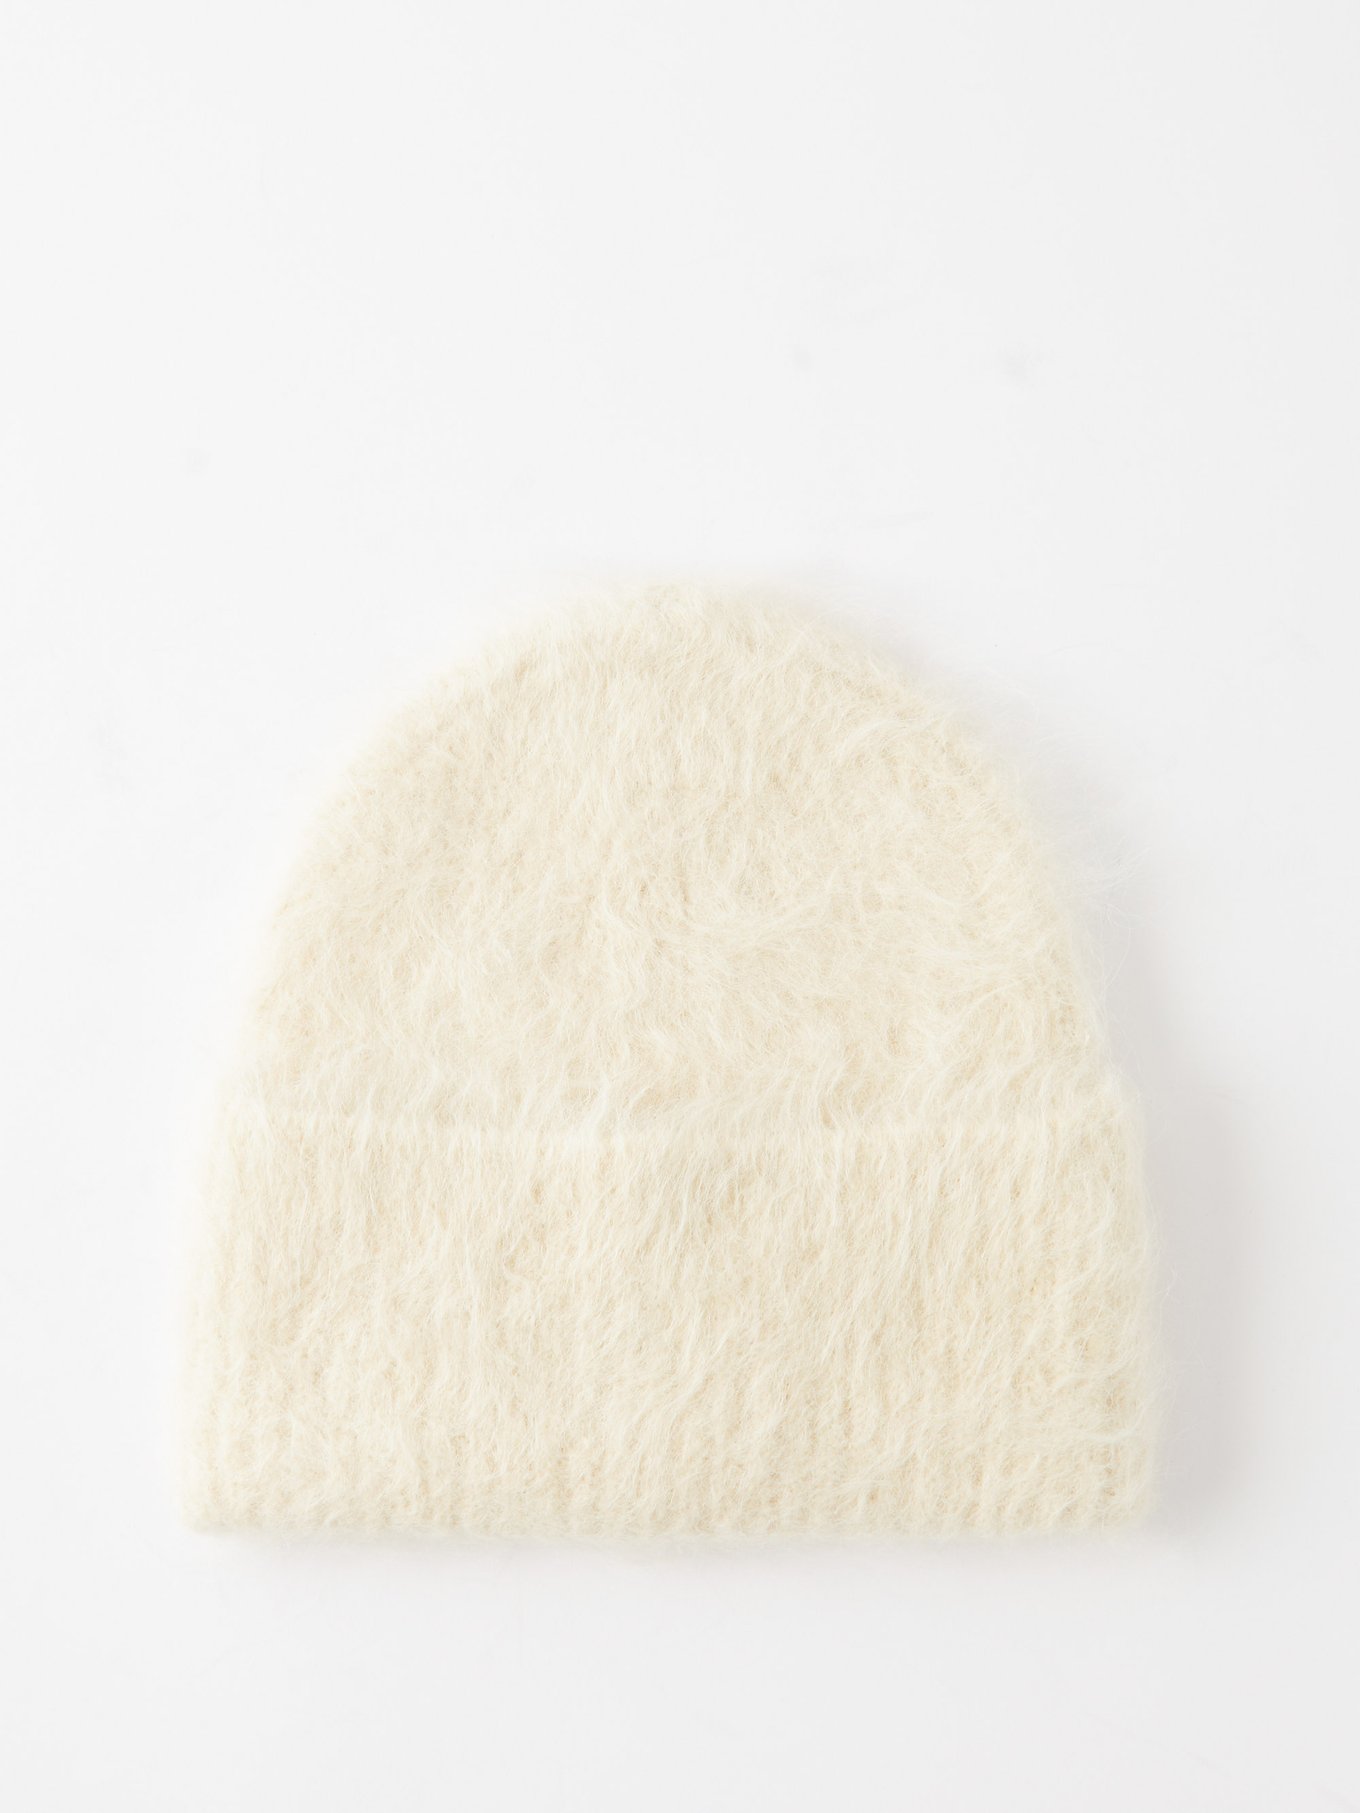 Matching Alpaca Hat, Scarf, and Mitten Set X-Large / Natural White